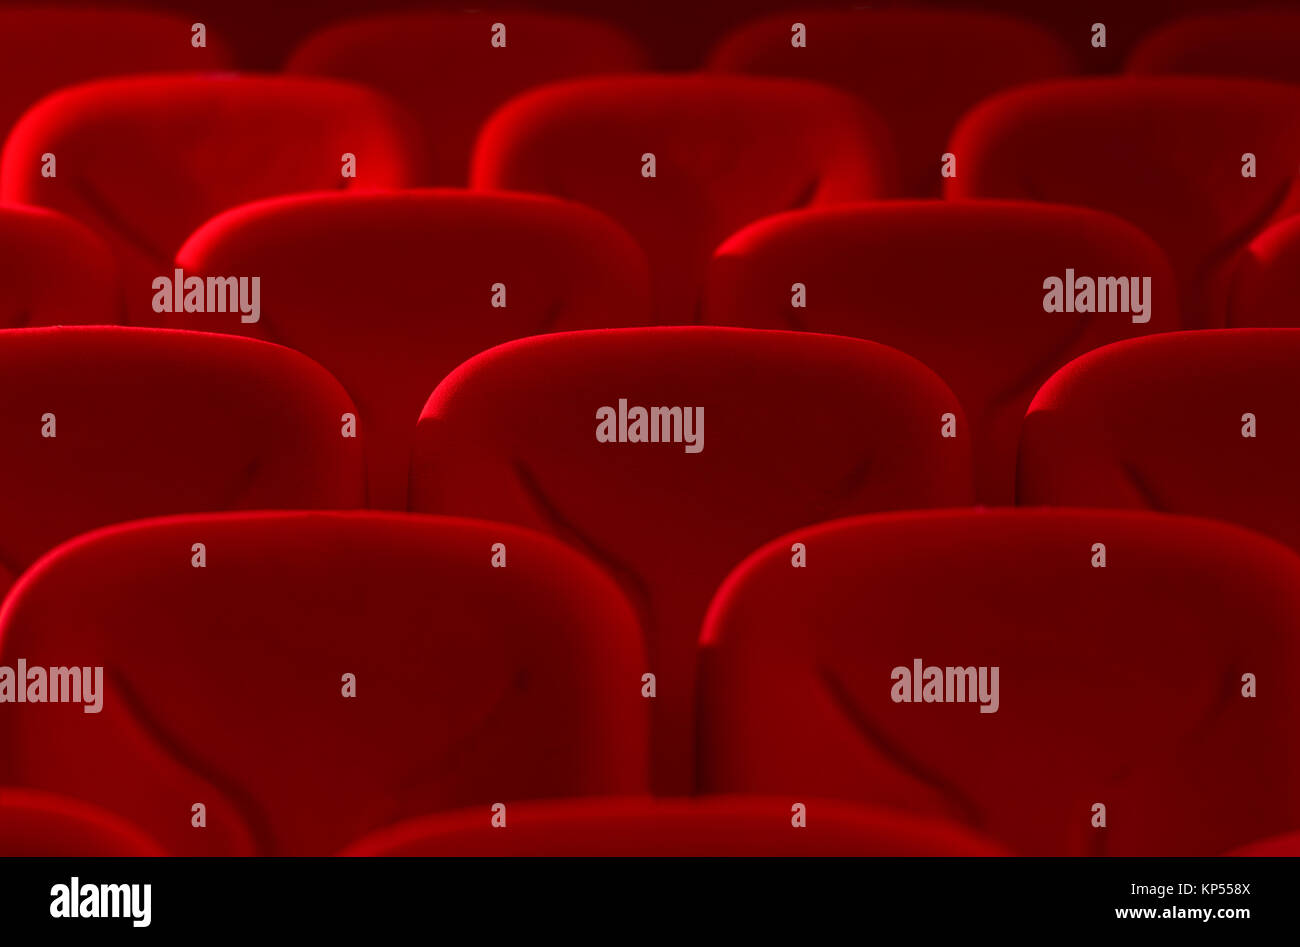 Cinema / theater seats Stock Photo